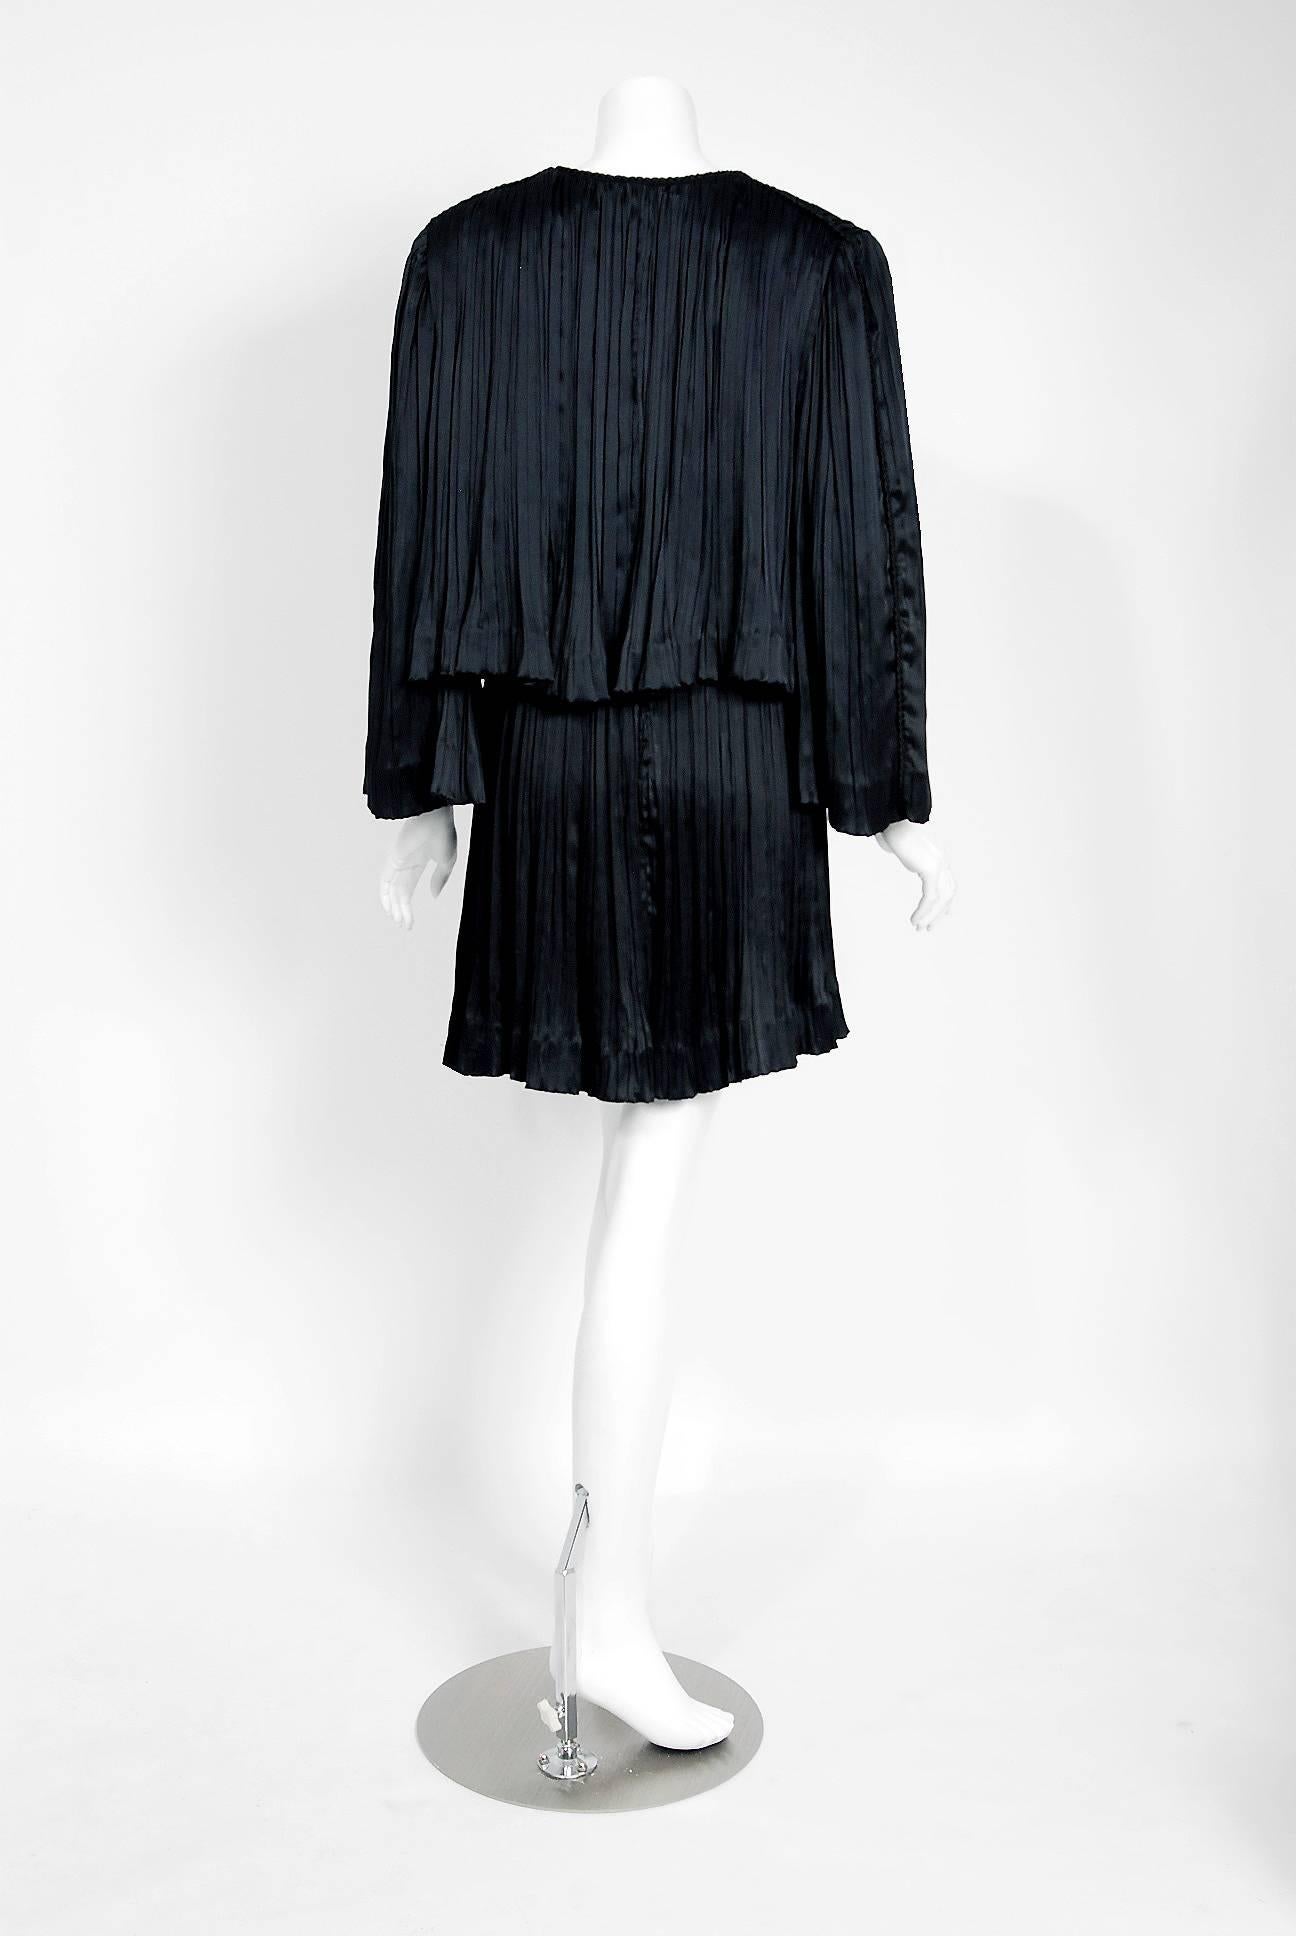 1977 Chanel Black Fortuny Pleated Silk Mini Cocktail Dress & Bell-Sleeve Jacket  3